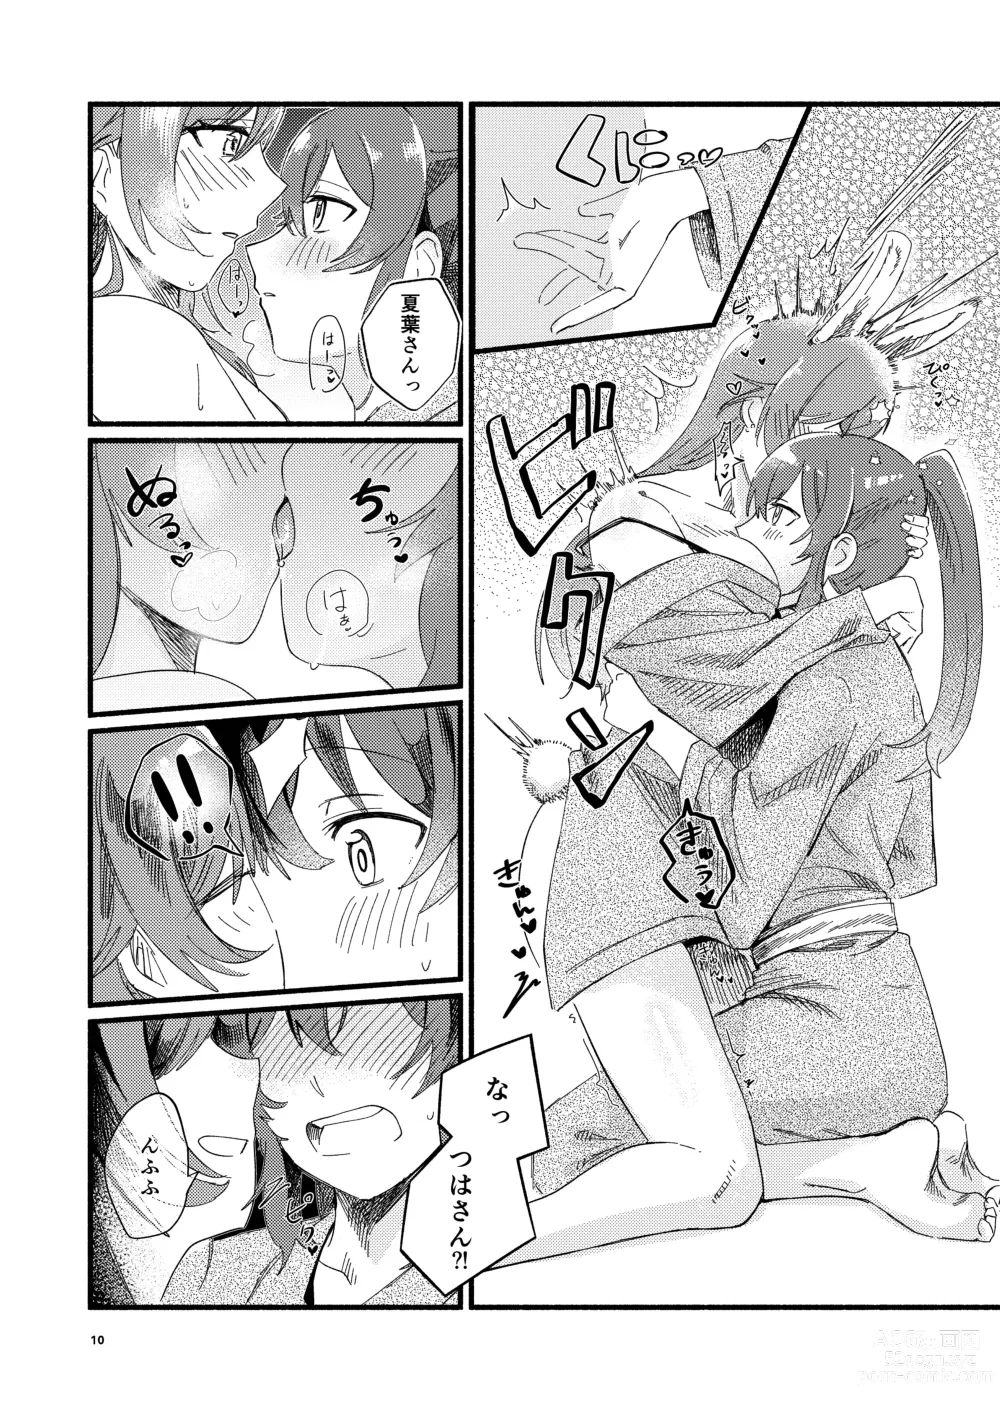 Page 10 of doujinshi Usagi no Ongaeshi